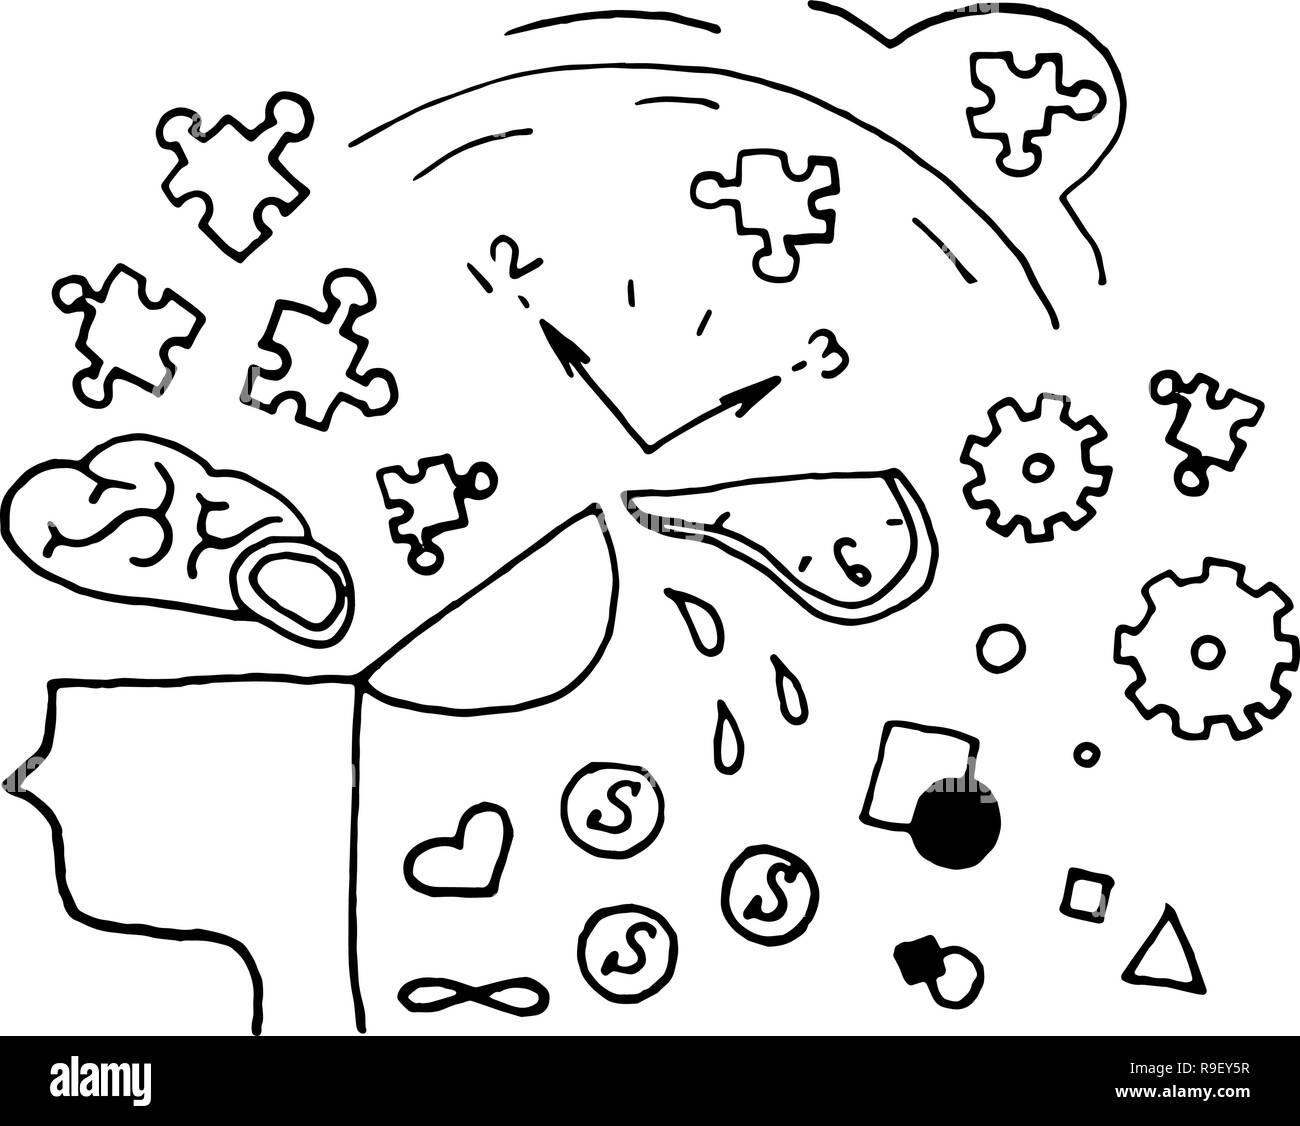 Business Idea doodles icons set. Vector illustration. Stock Vector